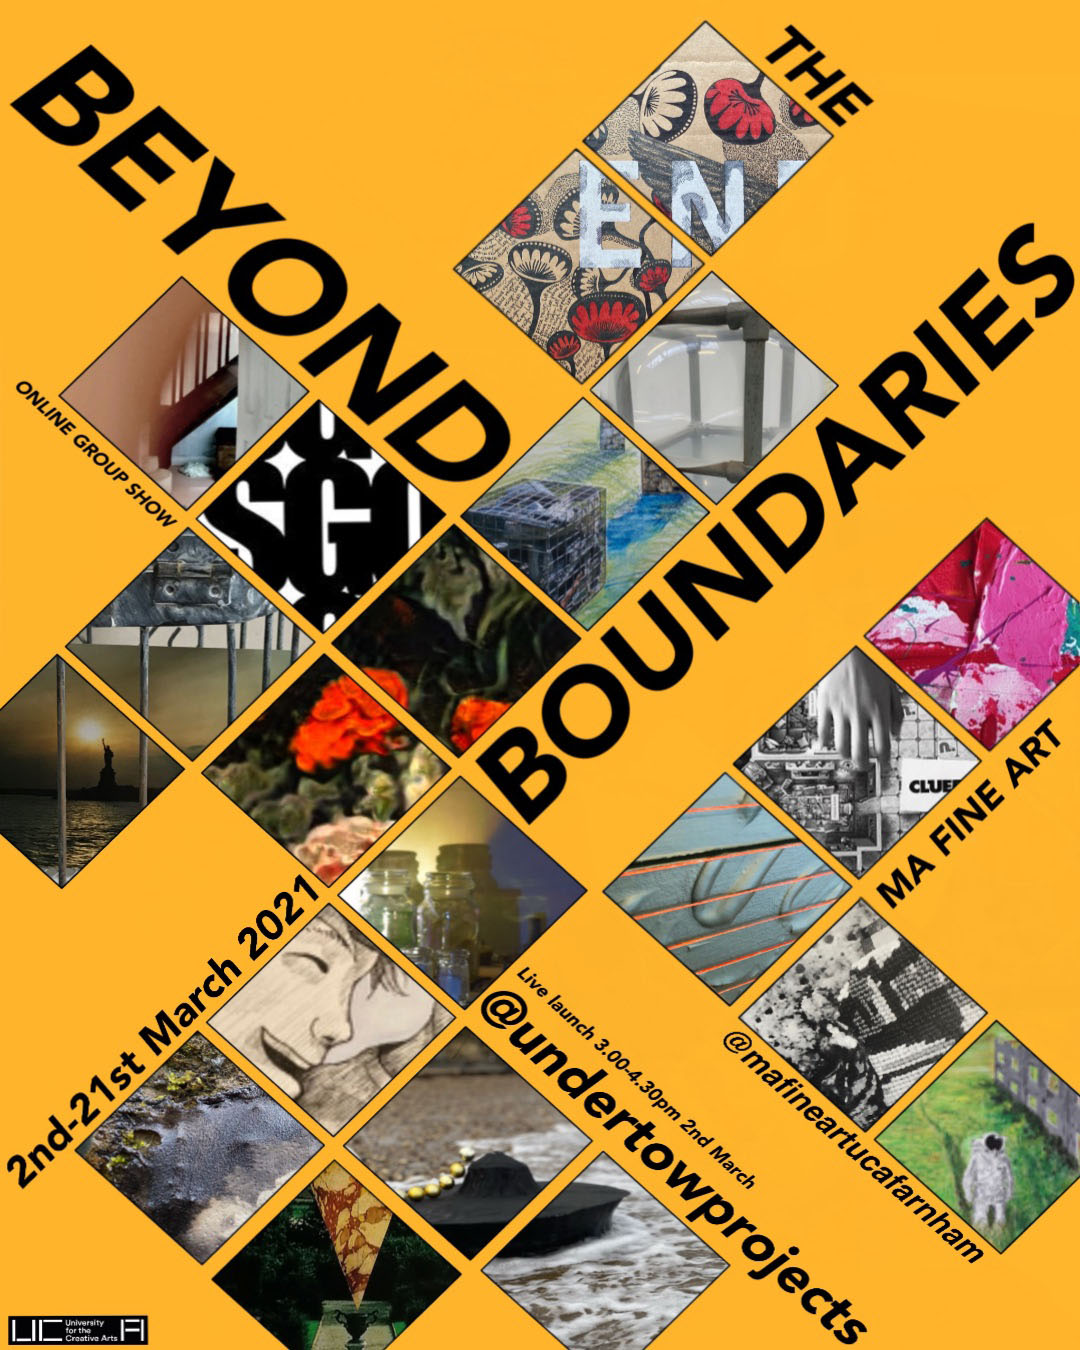 Beyond the Boundaries Final Poster